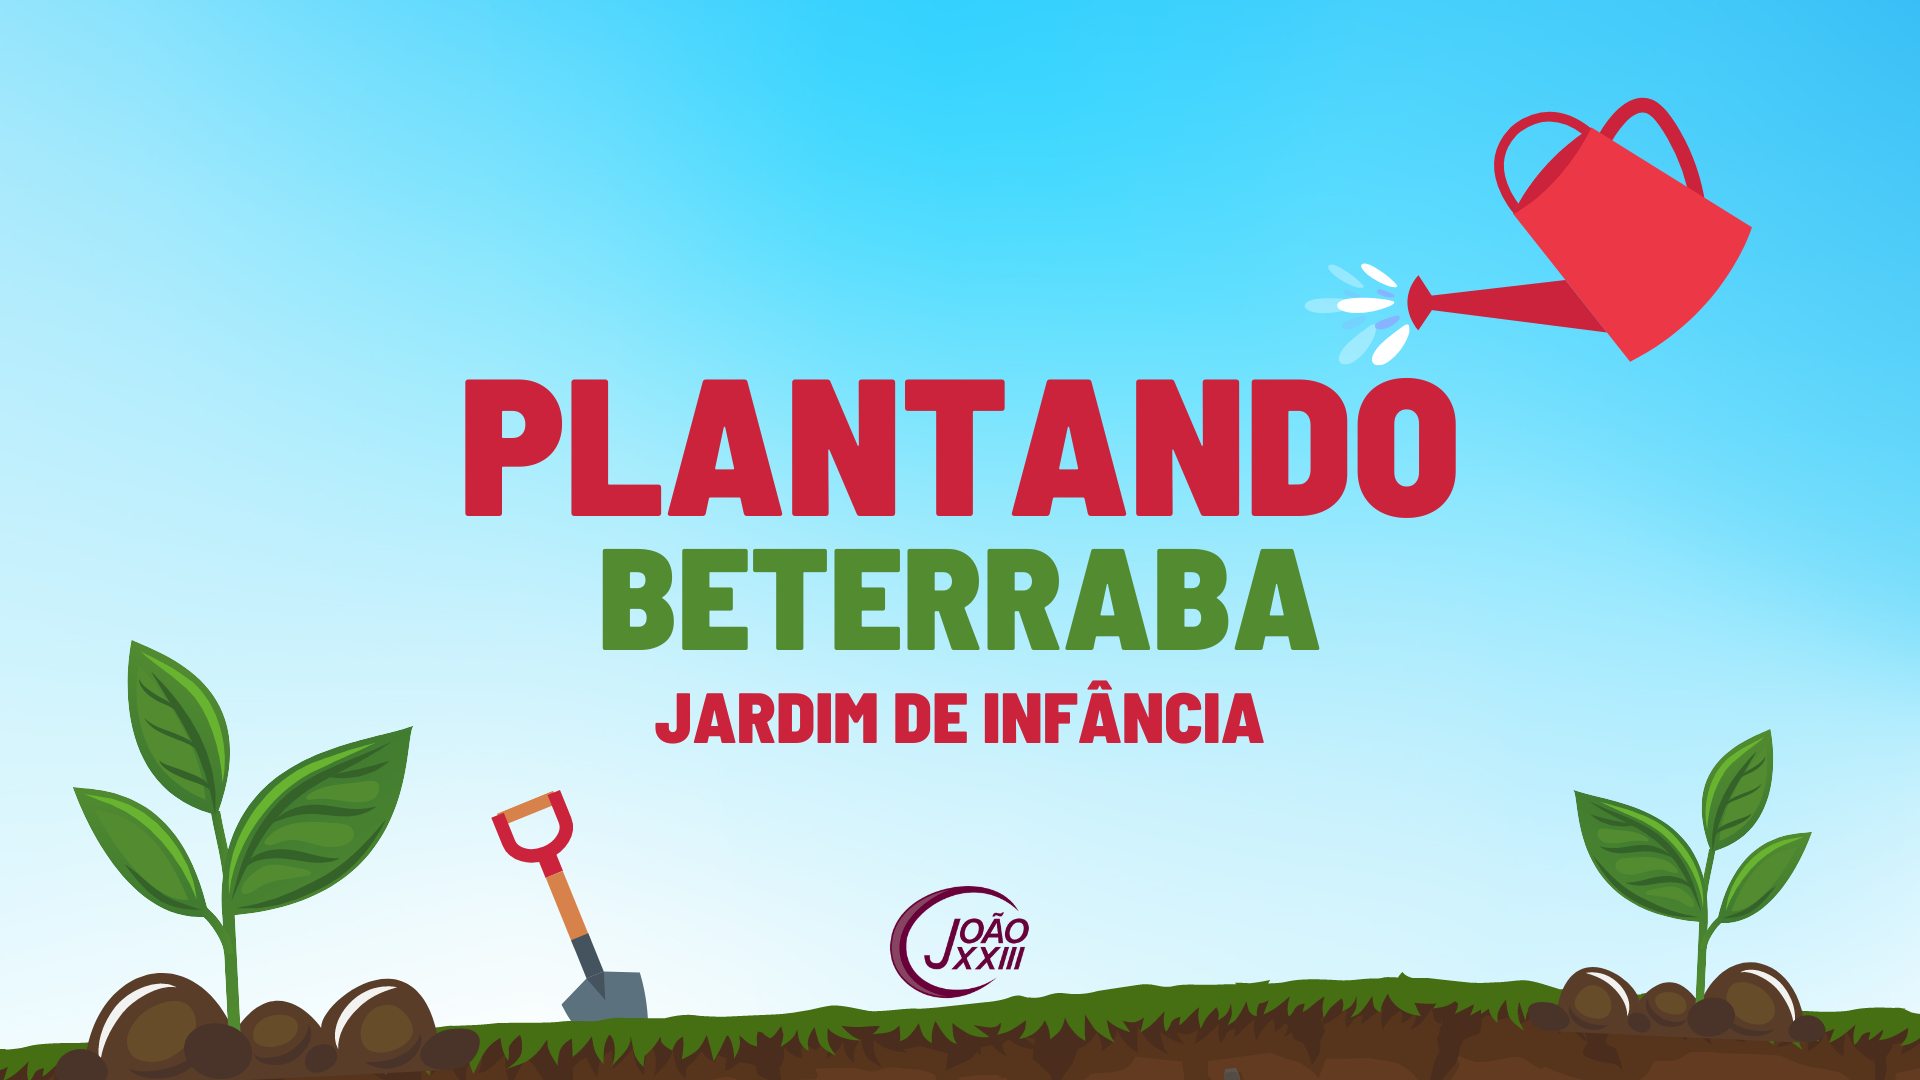 You are currently viewing Plantando beterraba